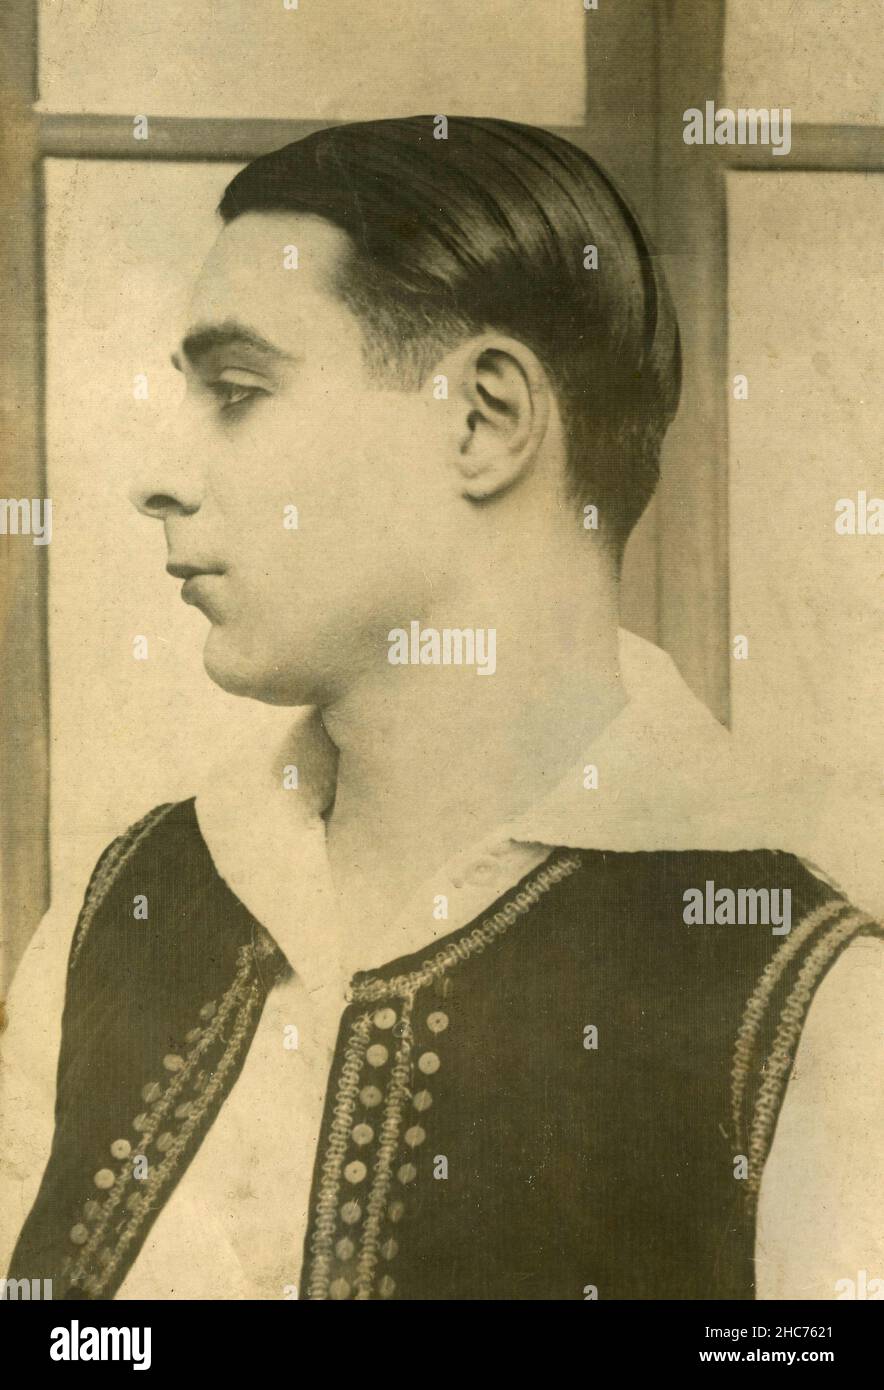 Italian silent movie actor Antonio Di Costanzo, 1920s Stock Photo